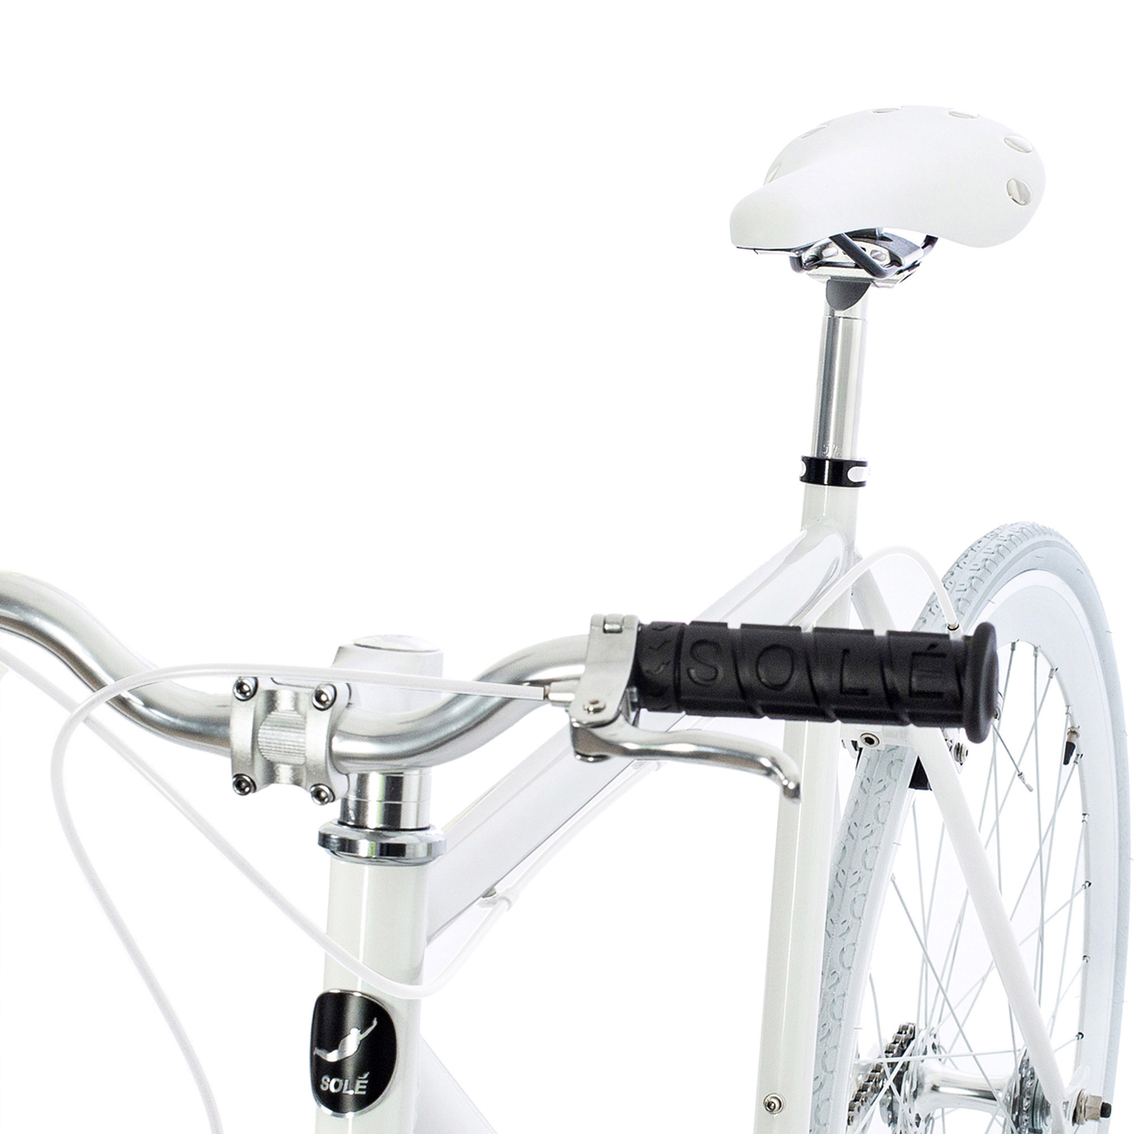 Sole el Blanco II Single Speed Bicycle - Image 3 of 5